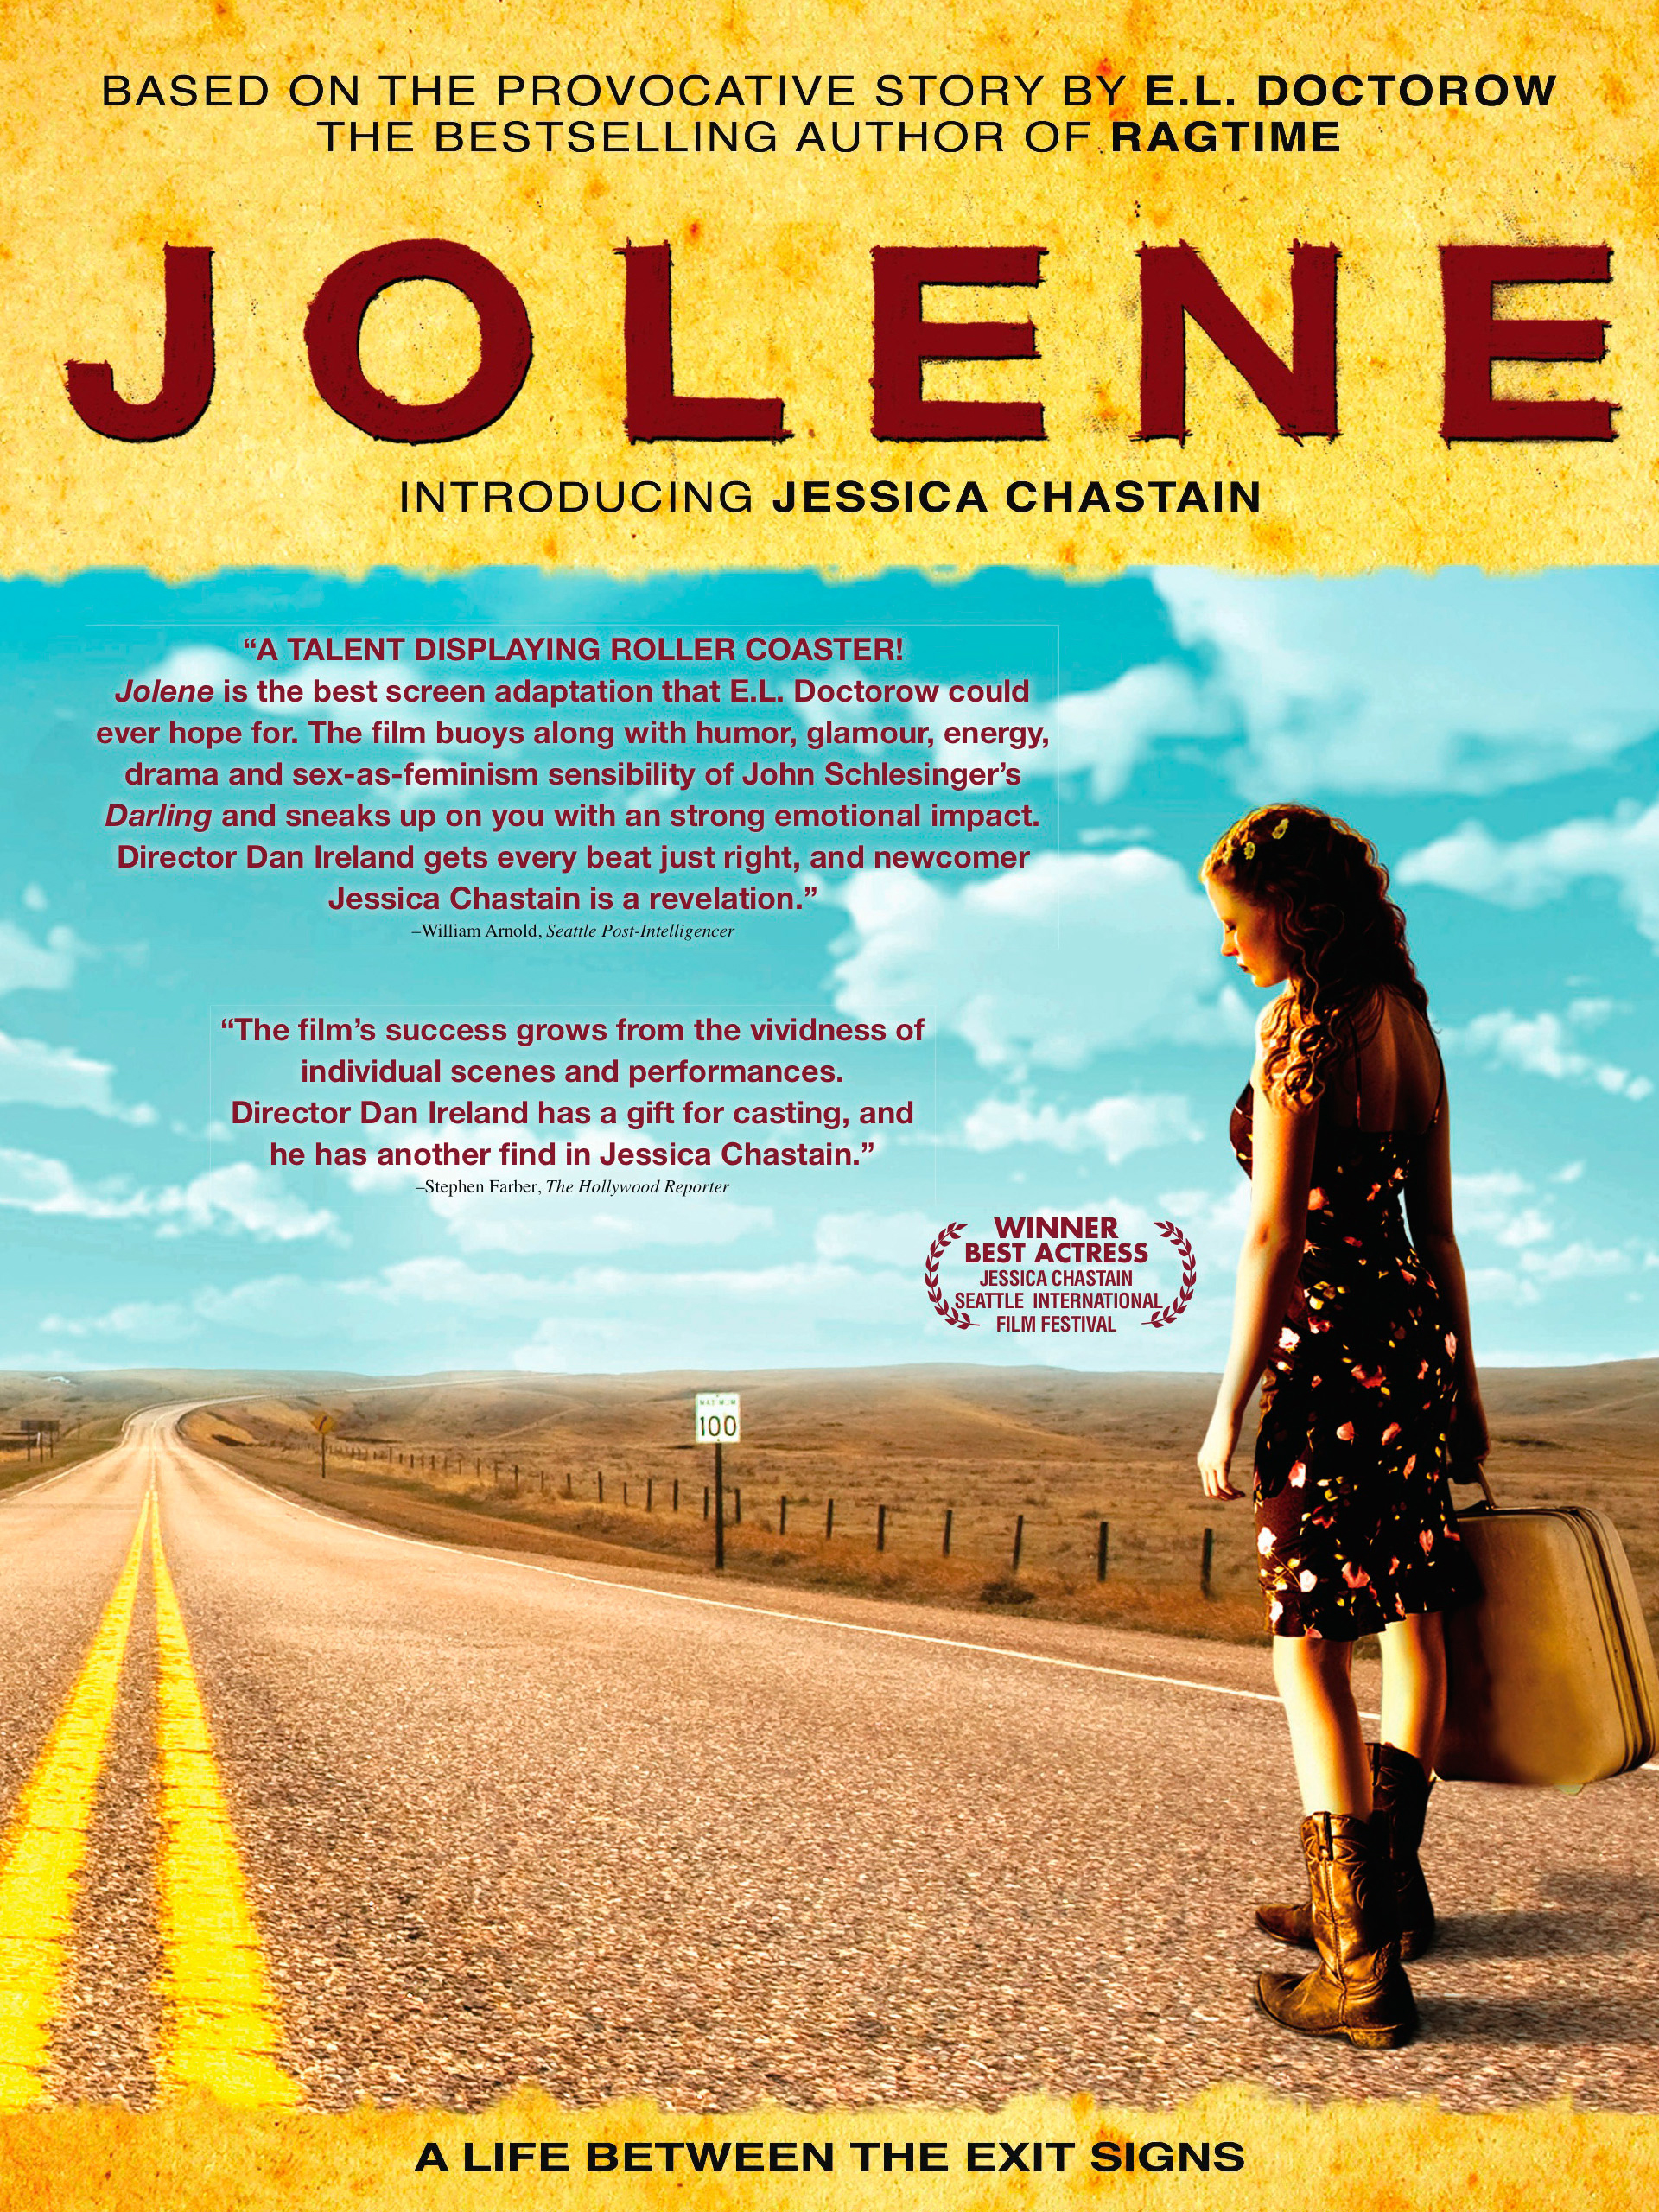 Jolene - Where to Watch and Stream